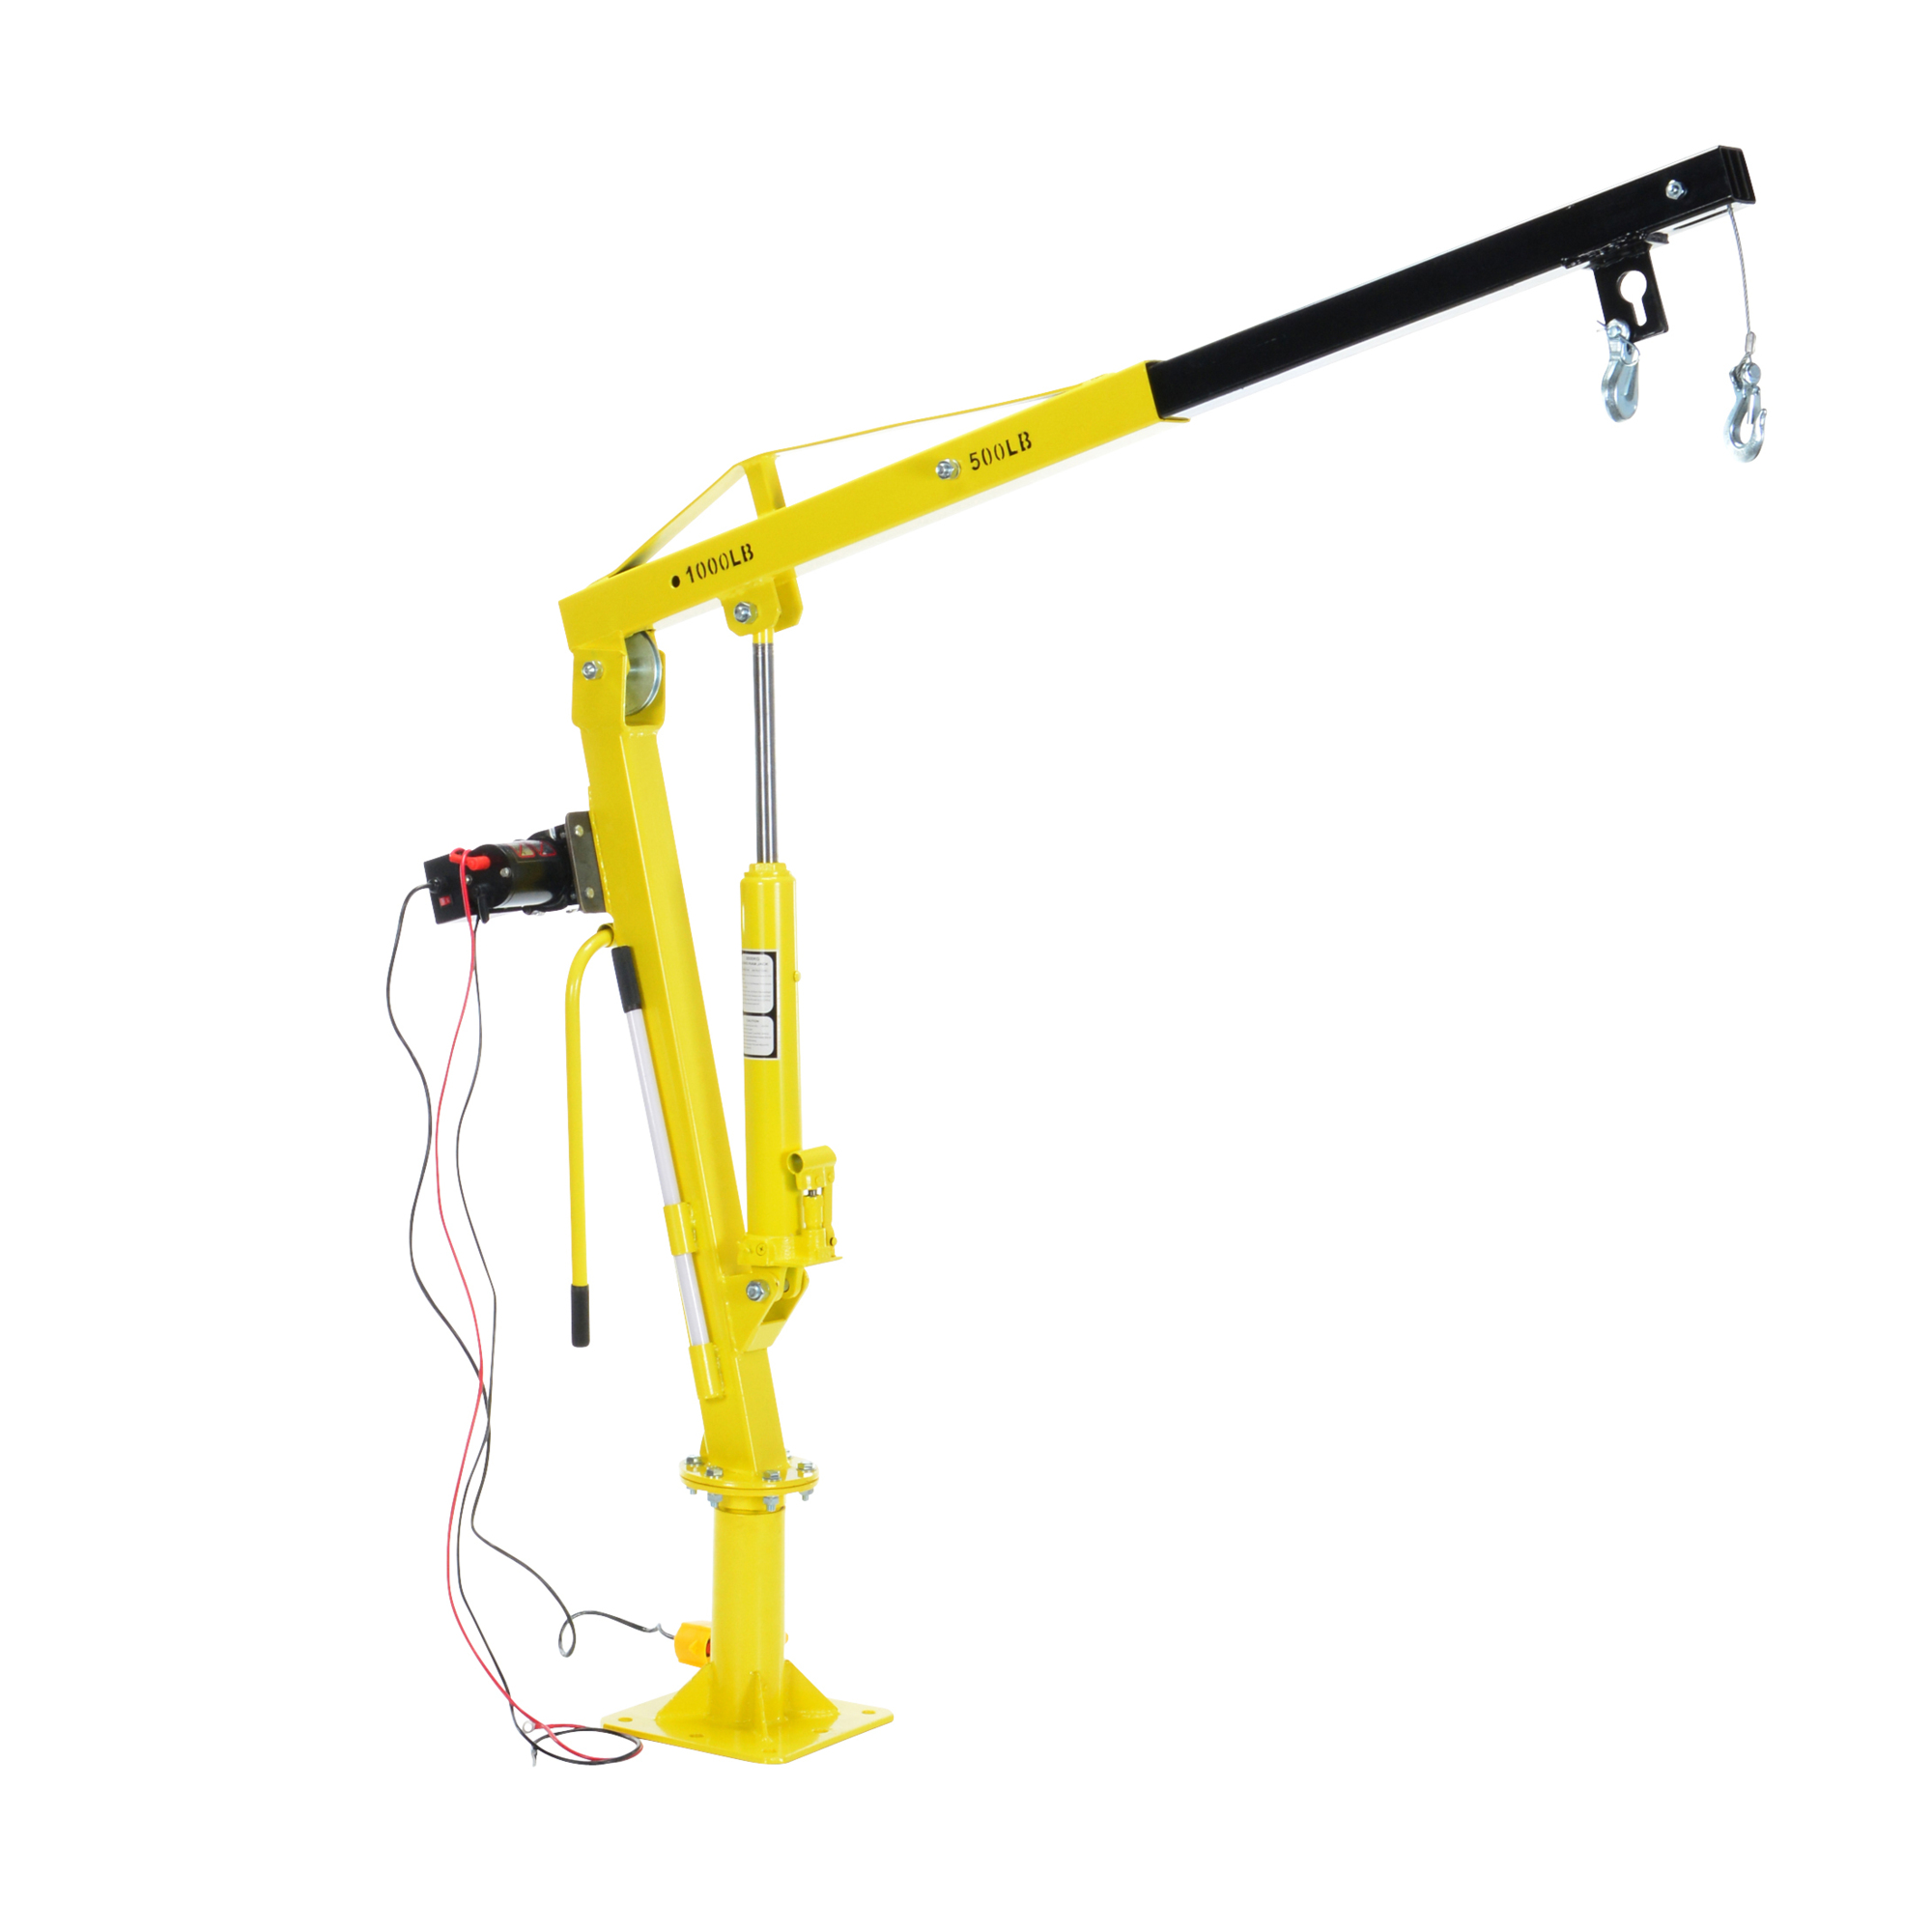 Vestil, Winch jib crane DC power .5k yellow, Mount Type Floor, Capacity 500 lb, Overall Boom Length 54 in, Model WTJ-2-DC